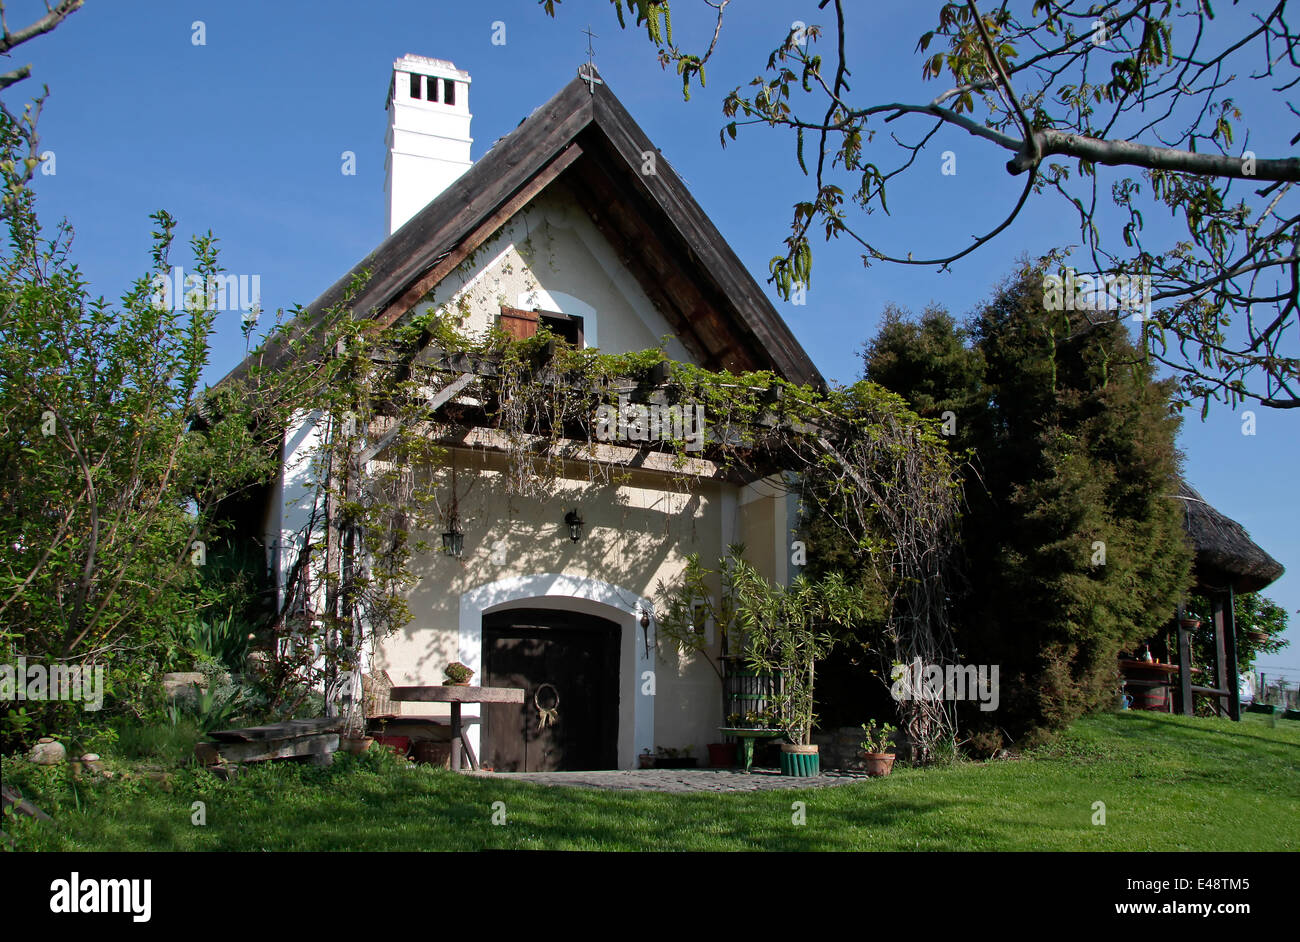 Old farmhouse in Aszofö at Lake Balaton, Hungary Stock Photo